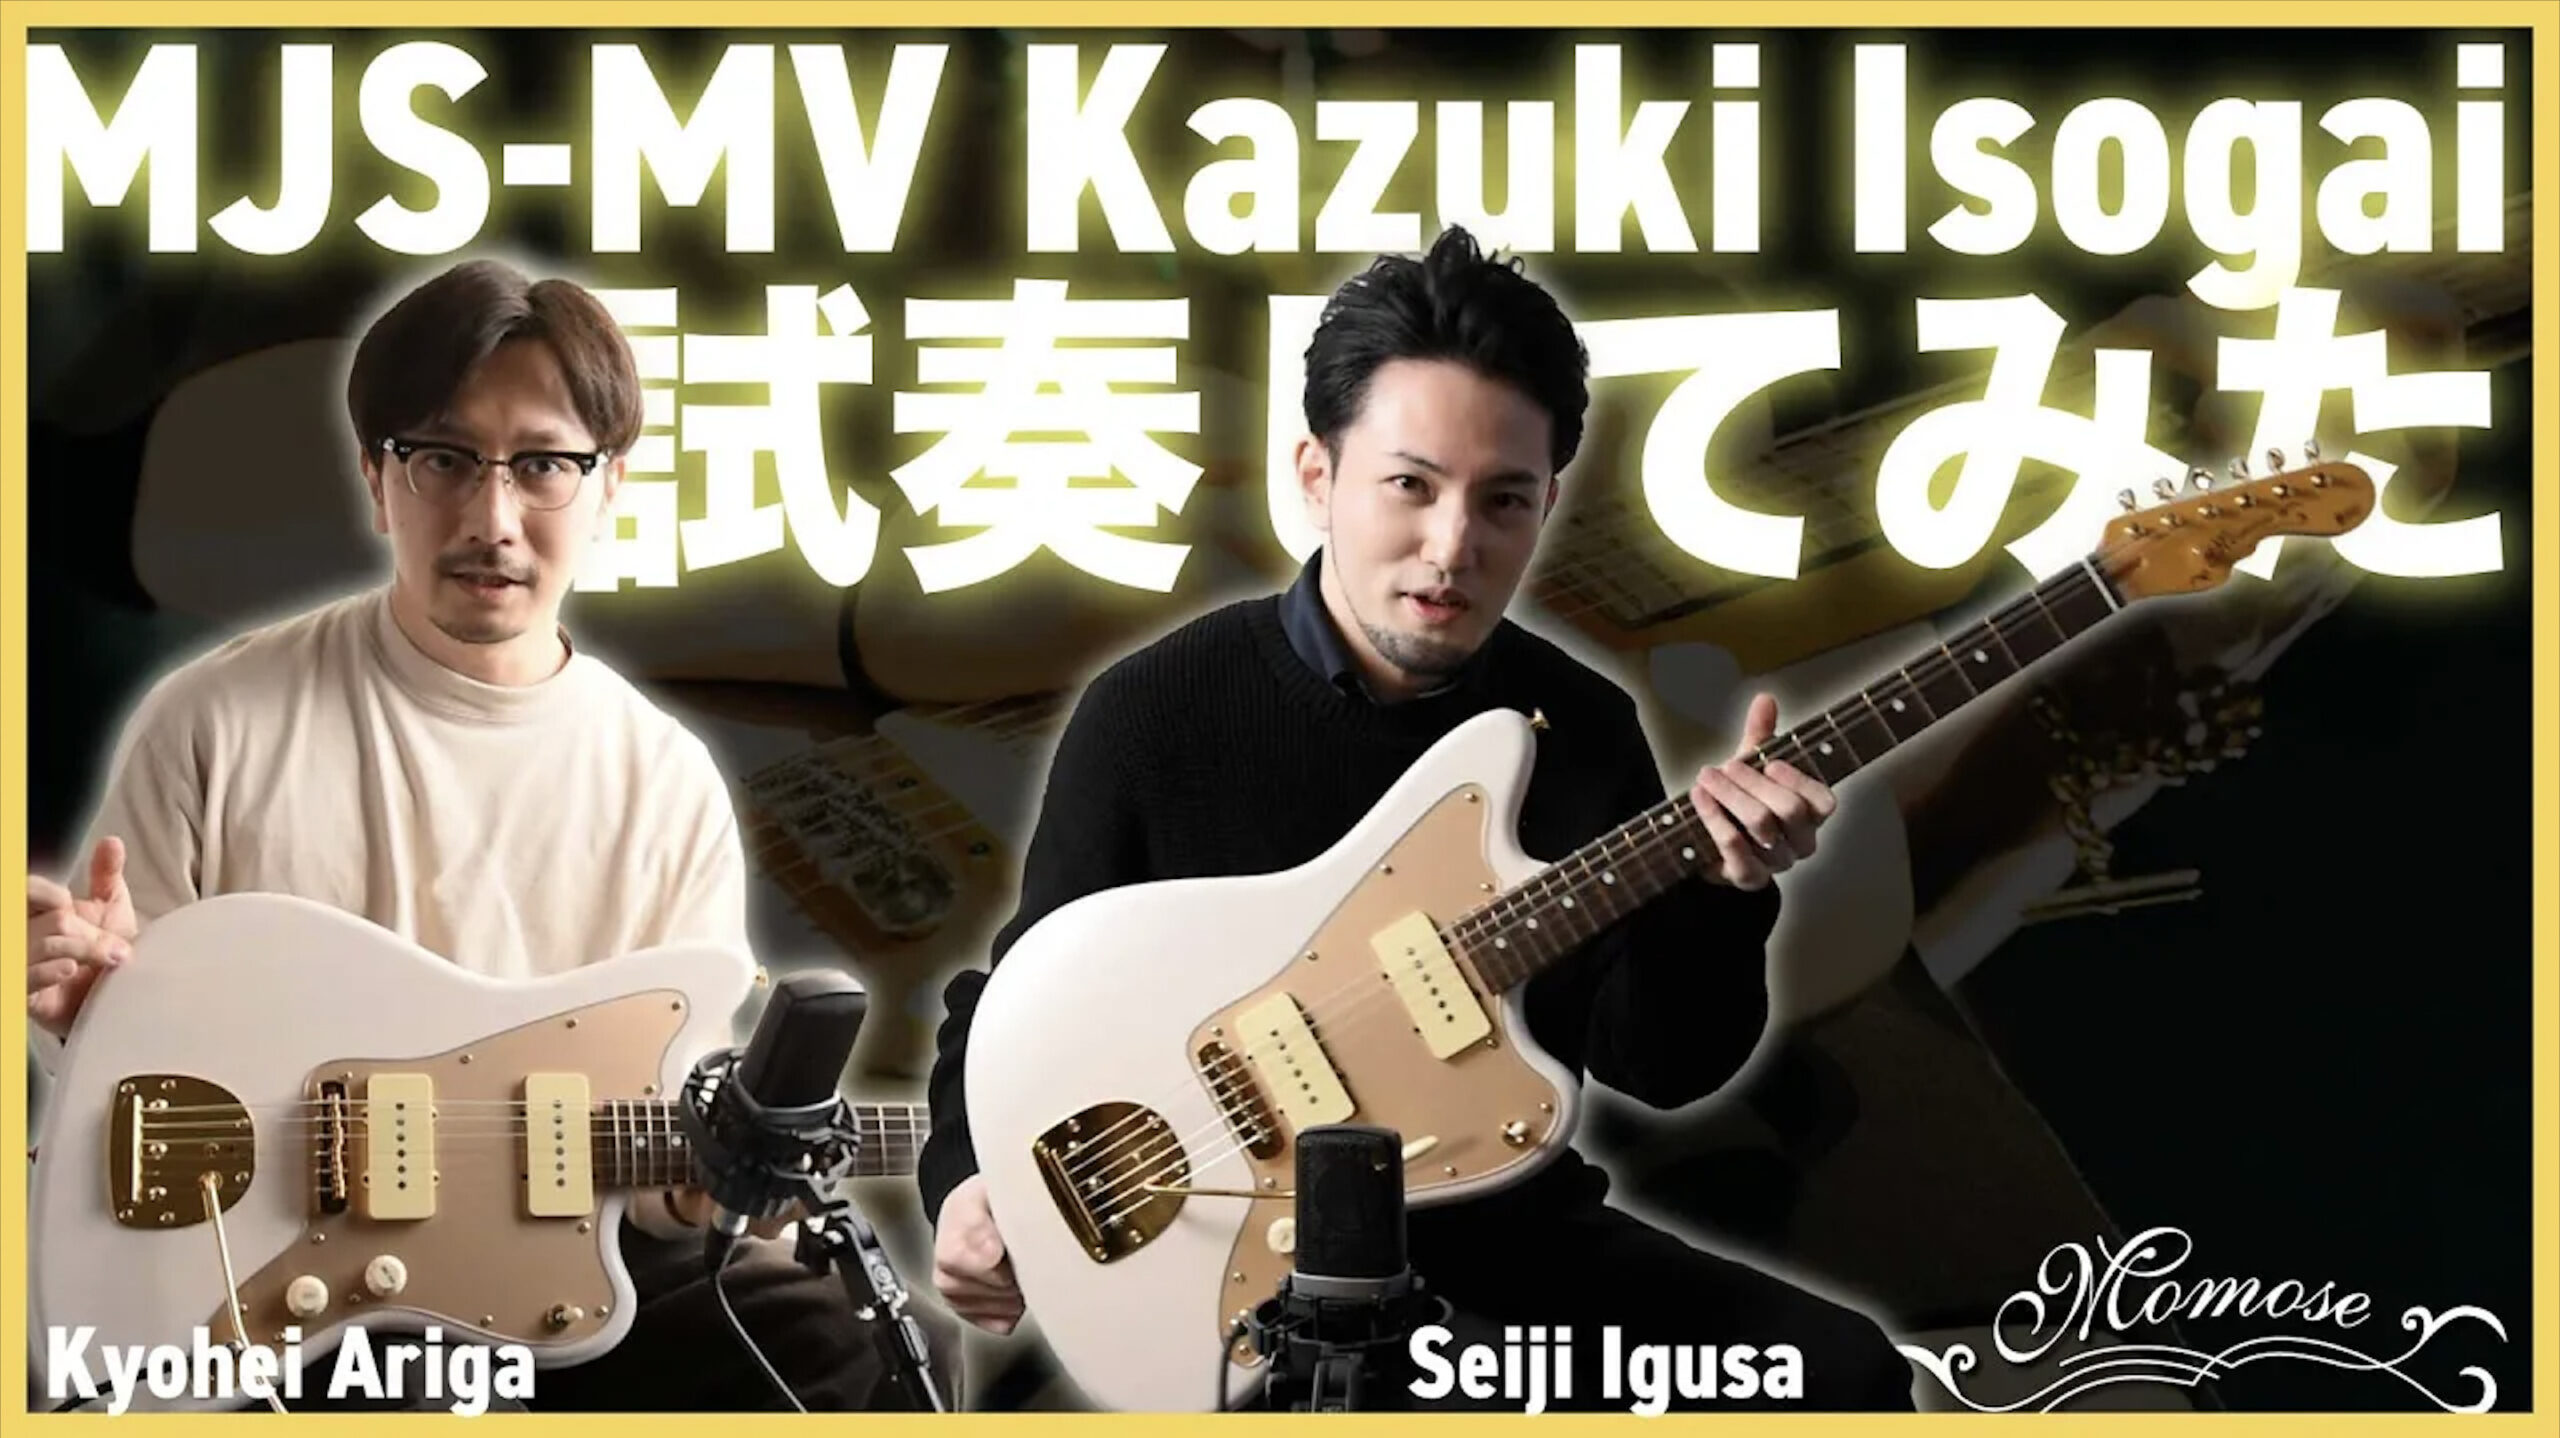 Kazuki Isogai Signature Model- Popular Guitarists Give Their Frist 